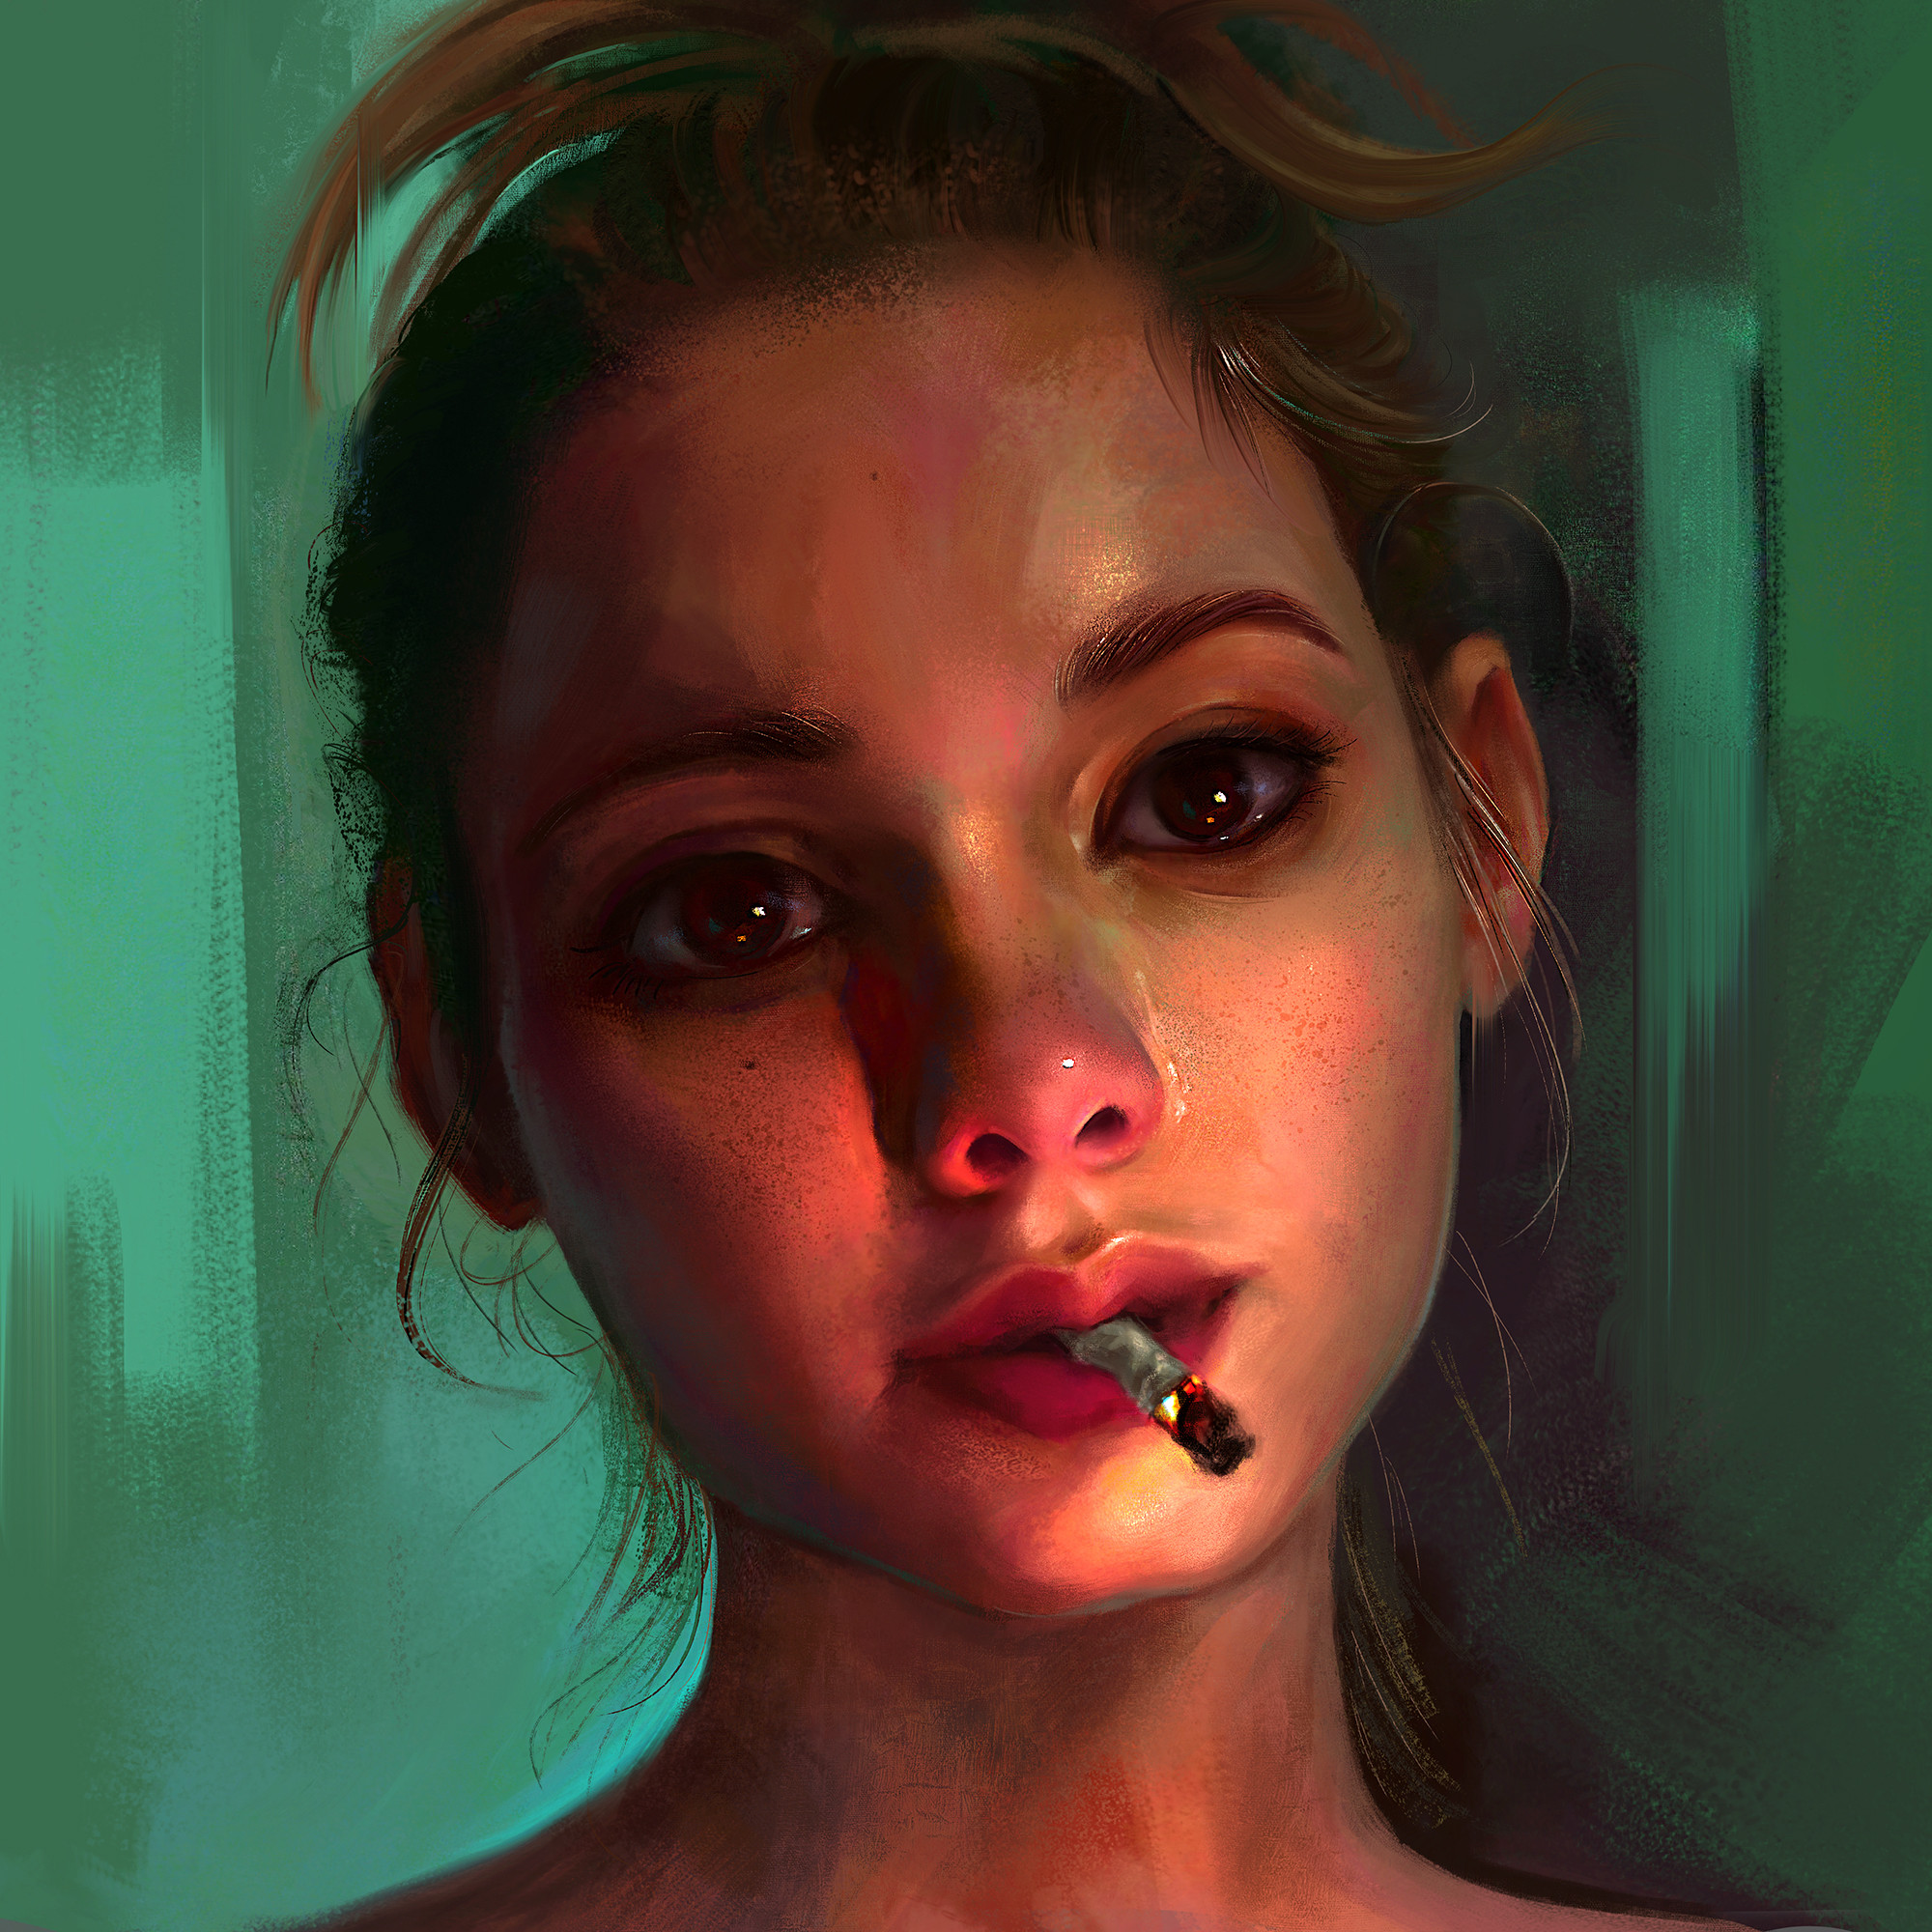 Mandy Jurgens Young Woman Portrait Face Cigarettes Women Smoking Brunette Digital Art Brown Eyes Art 2000x2000